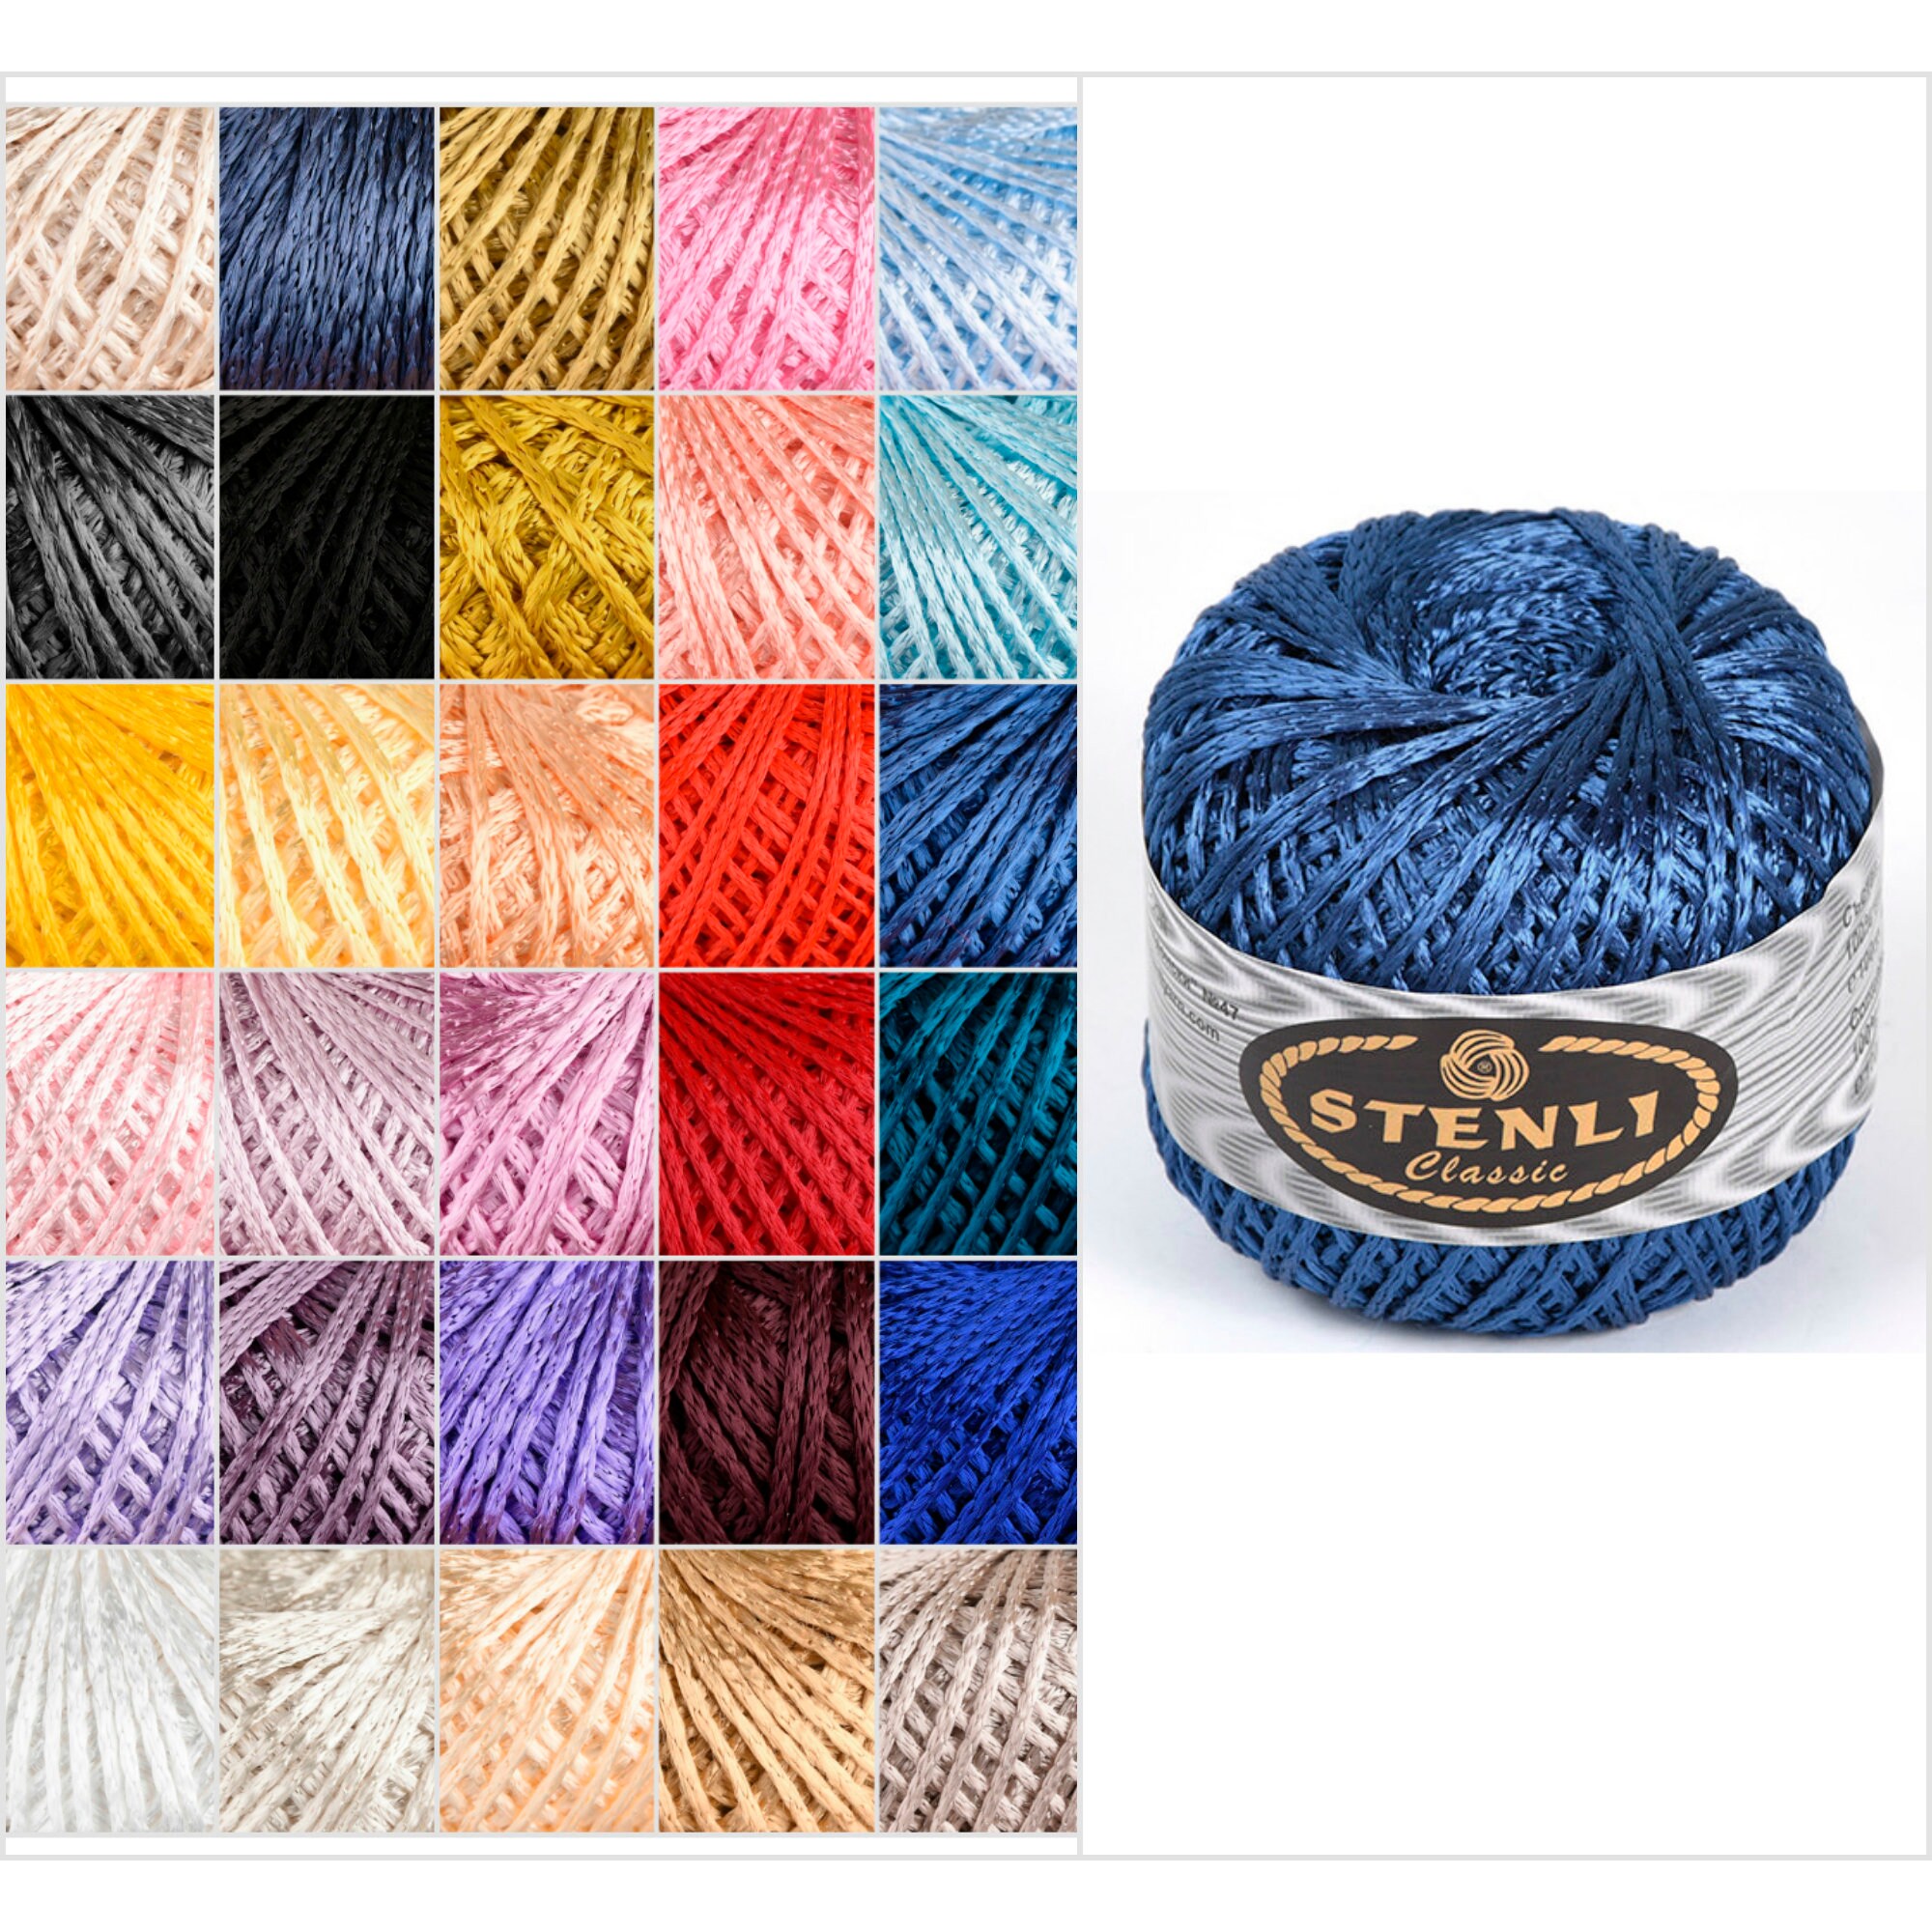 Viscose Rayon Art Silk Thread Yarn Embroidery Crochet Knitting Lace Jewelry Trim 